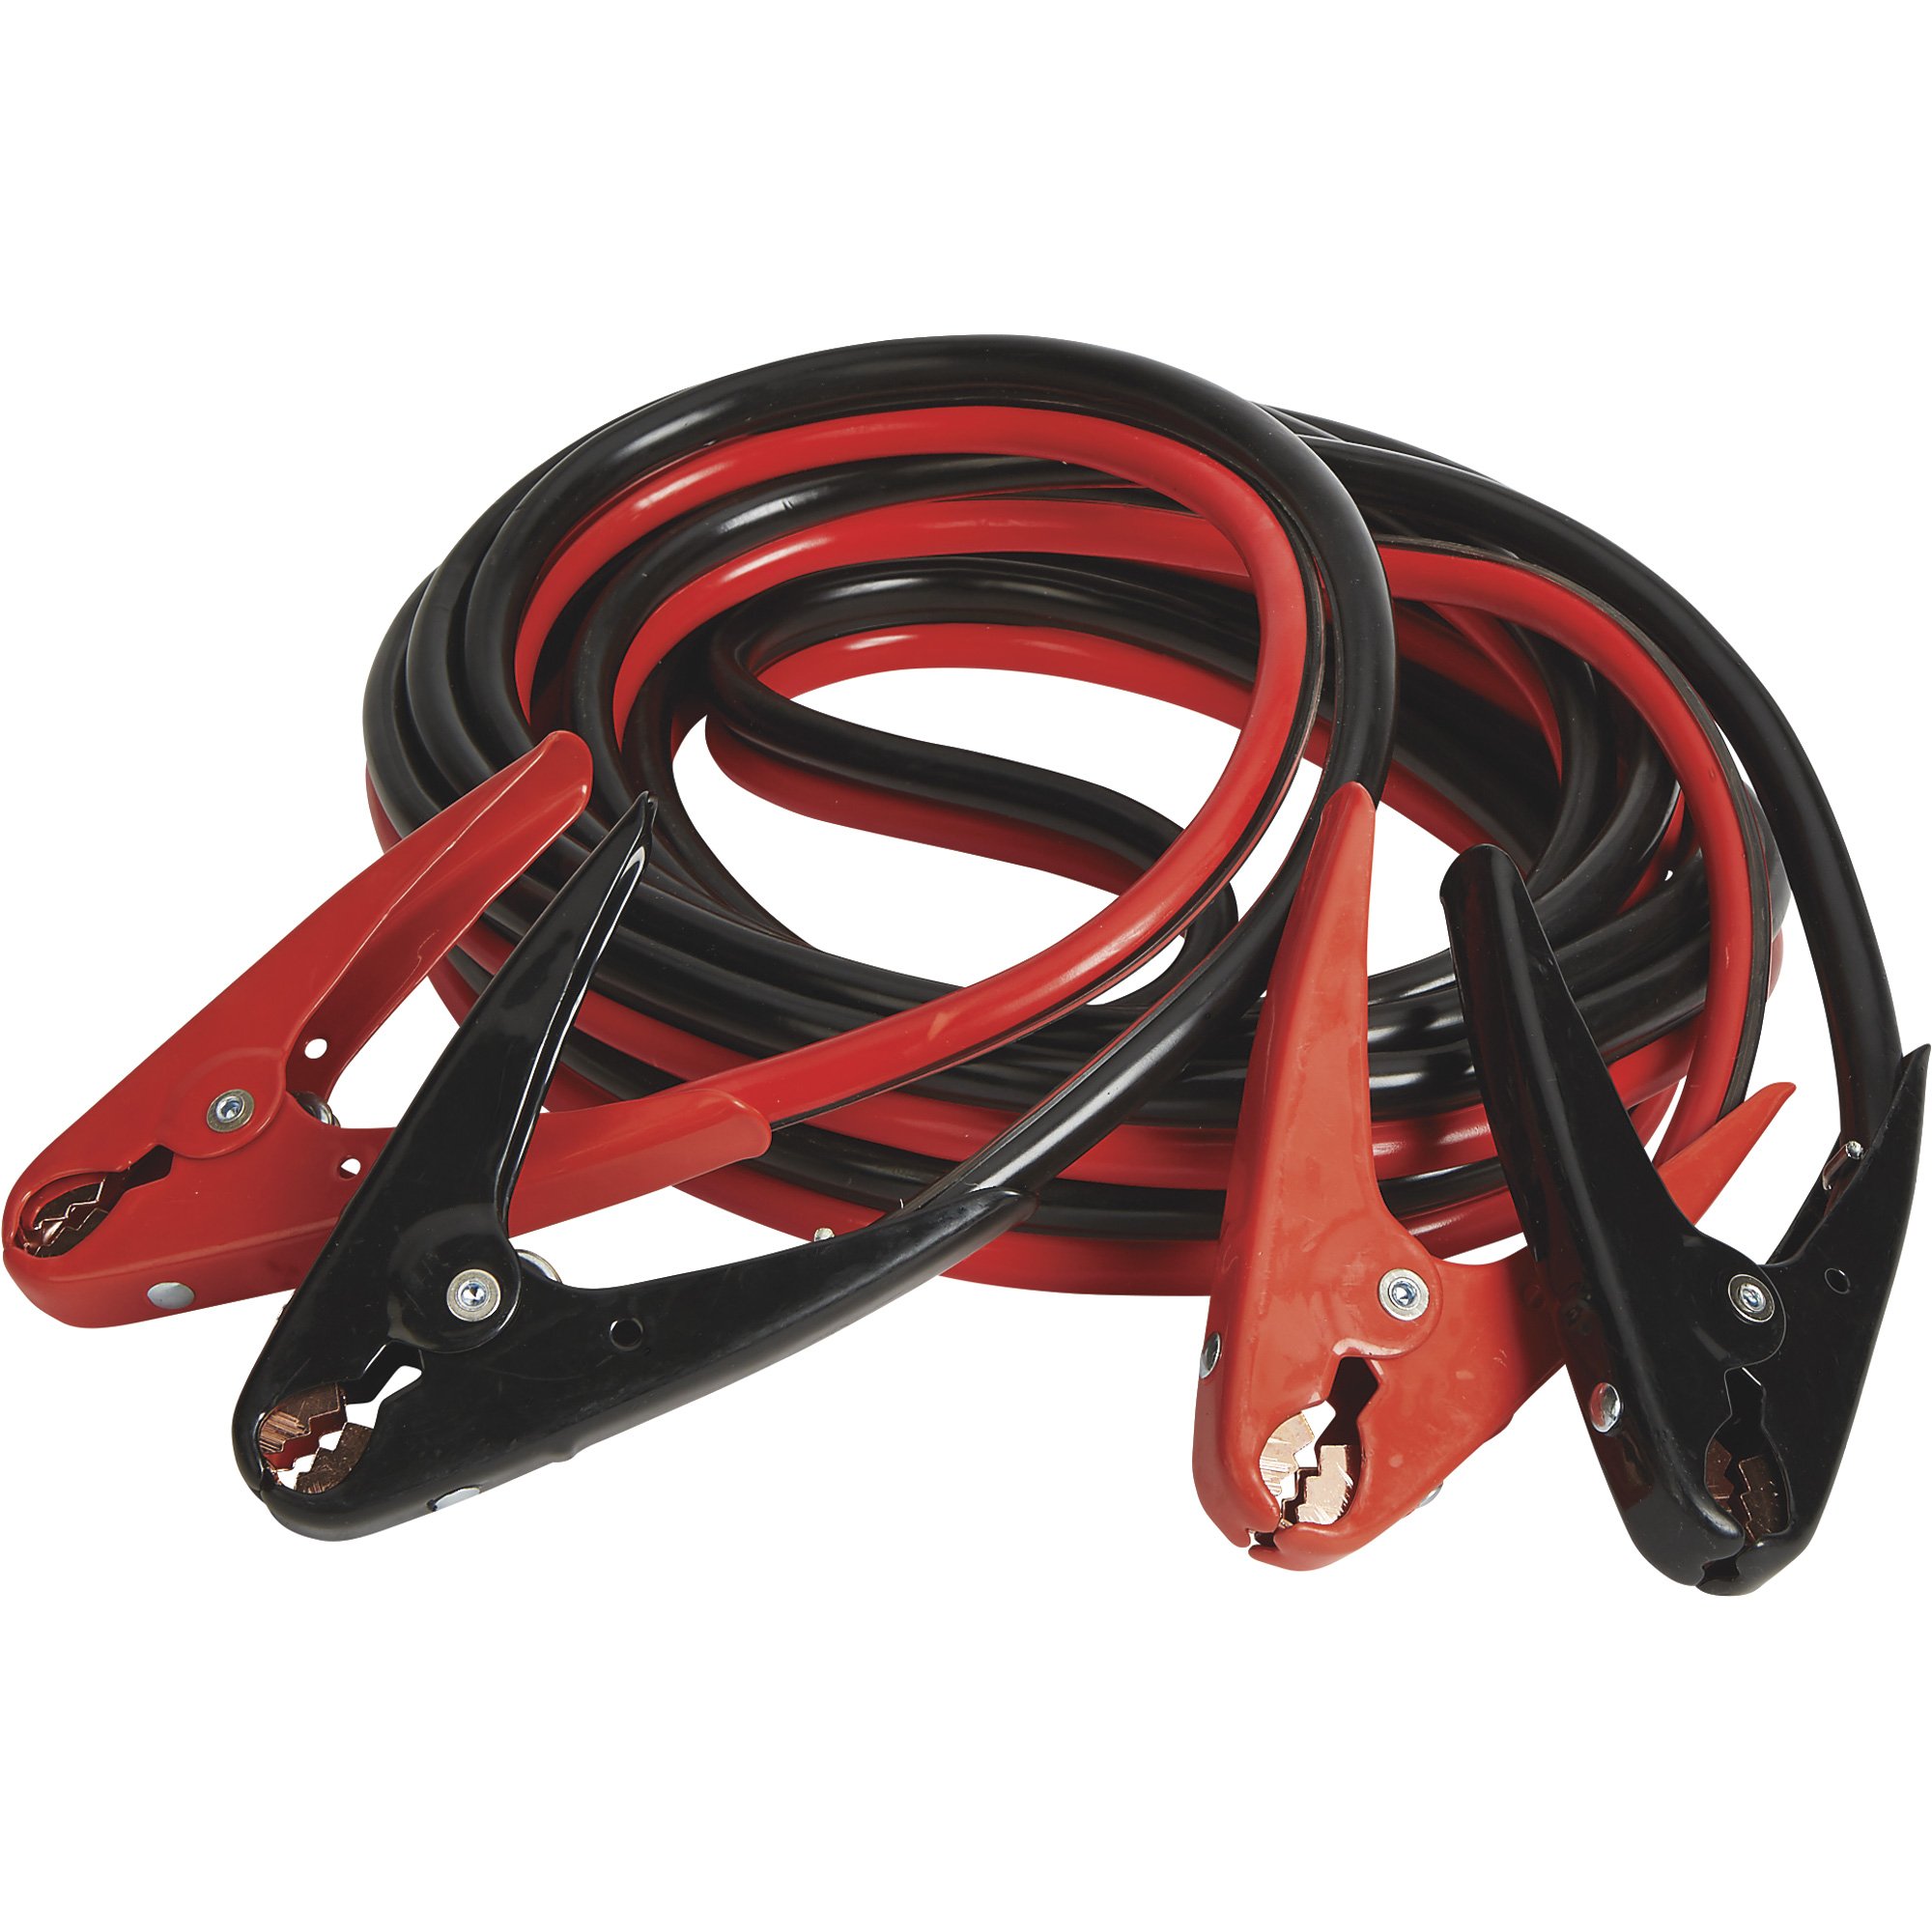 Northern Tool: Simoniz 20ft Heavy Duty (2 Gauge) Jumper Cables $17.49